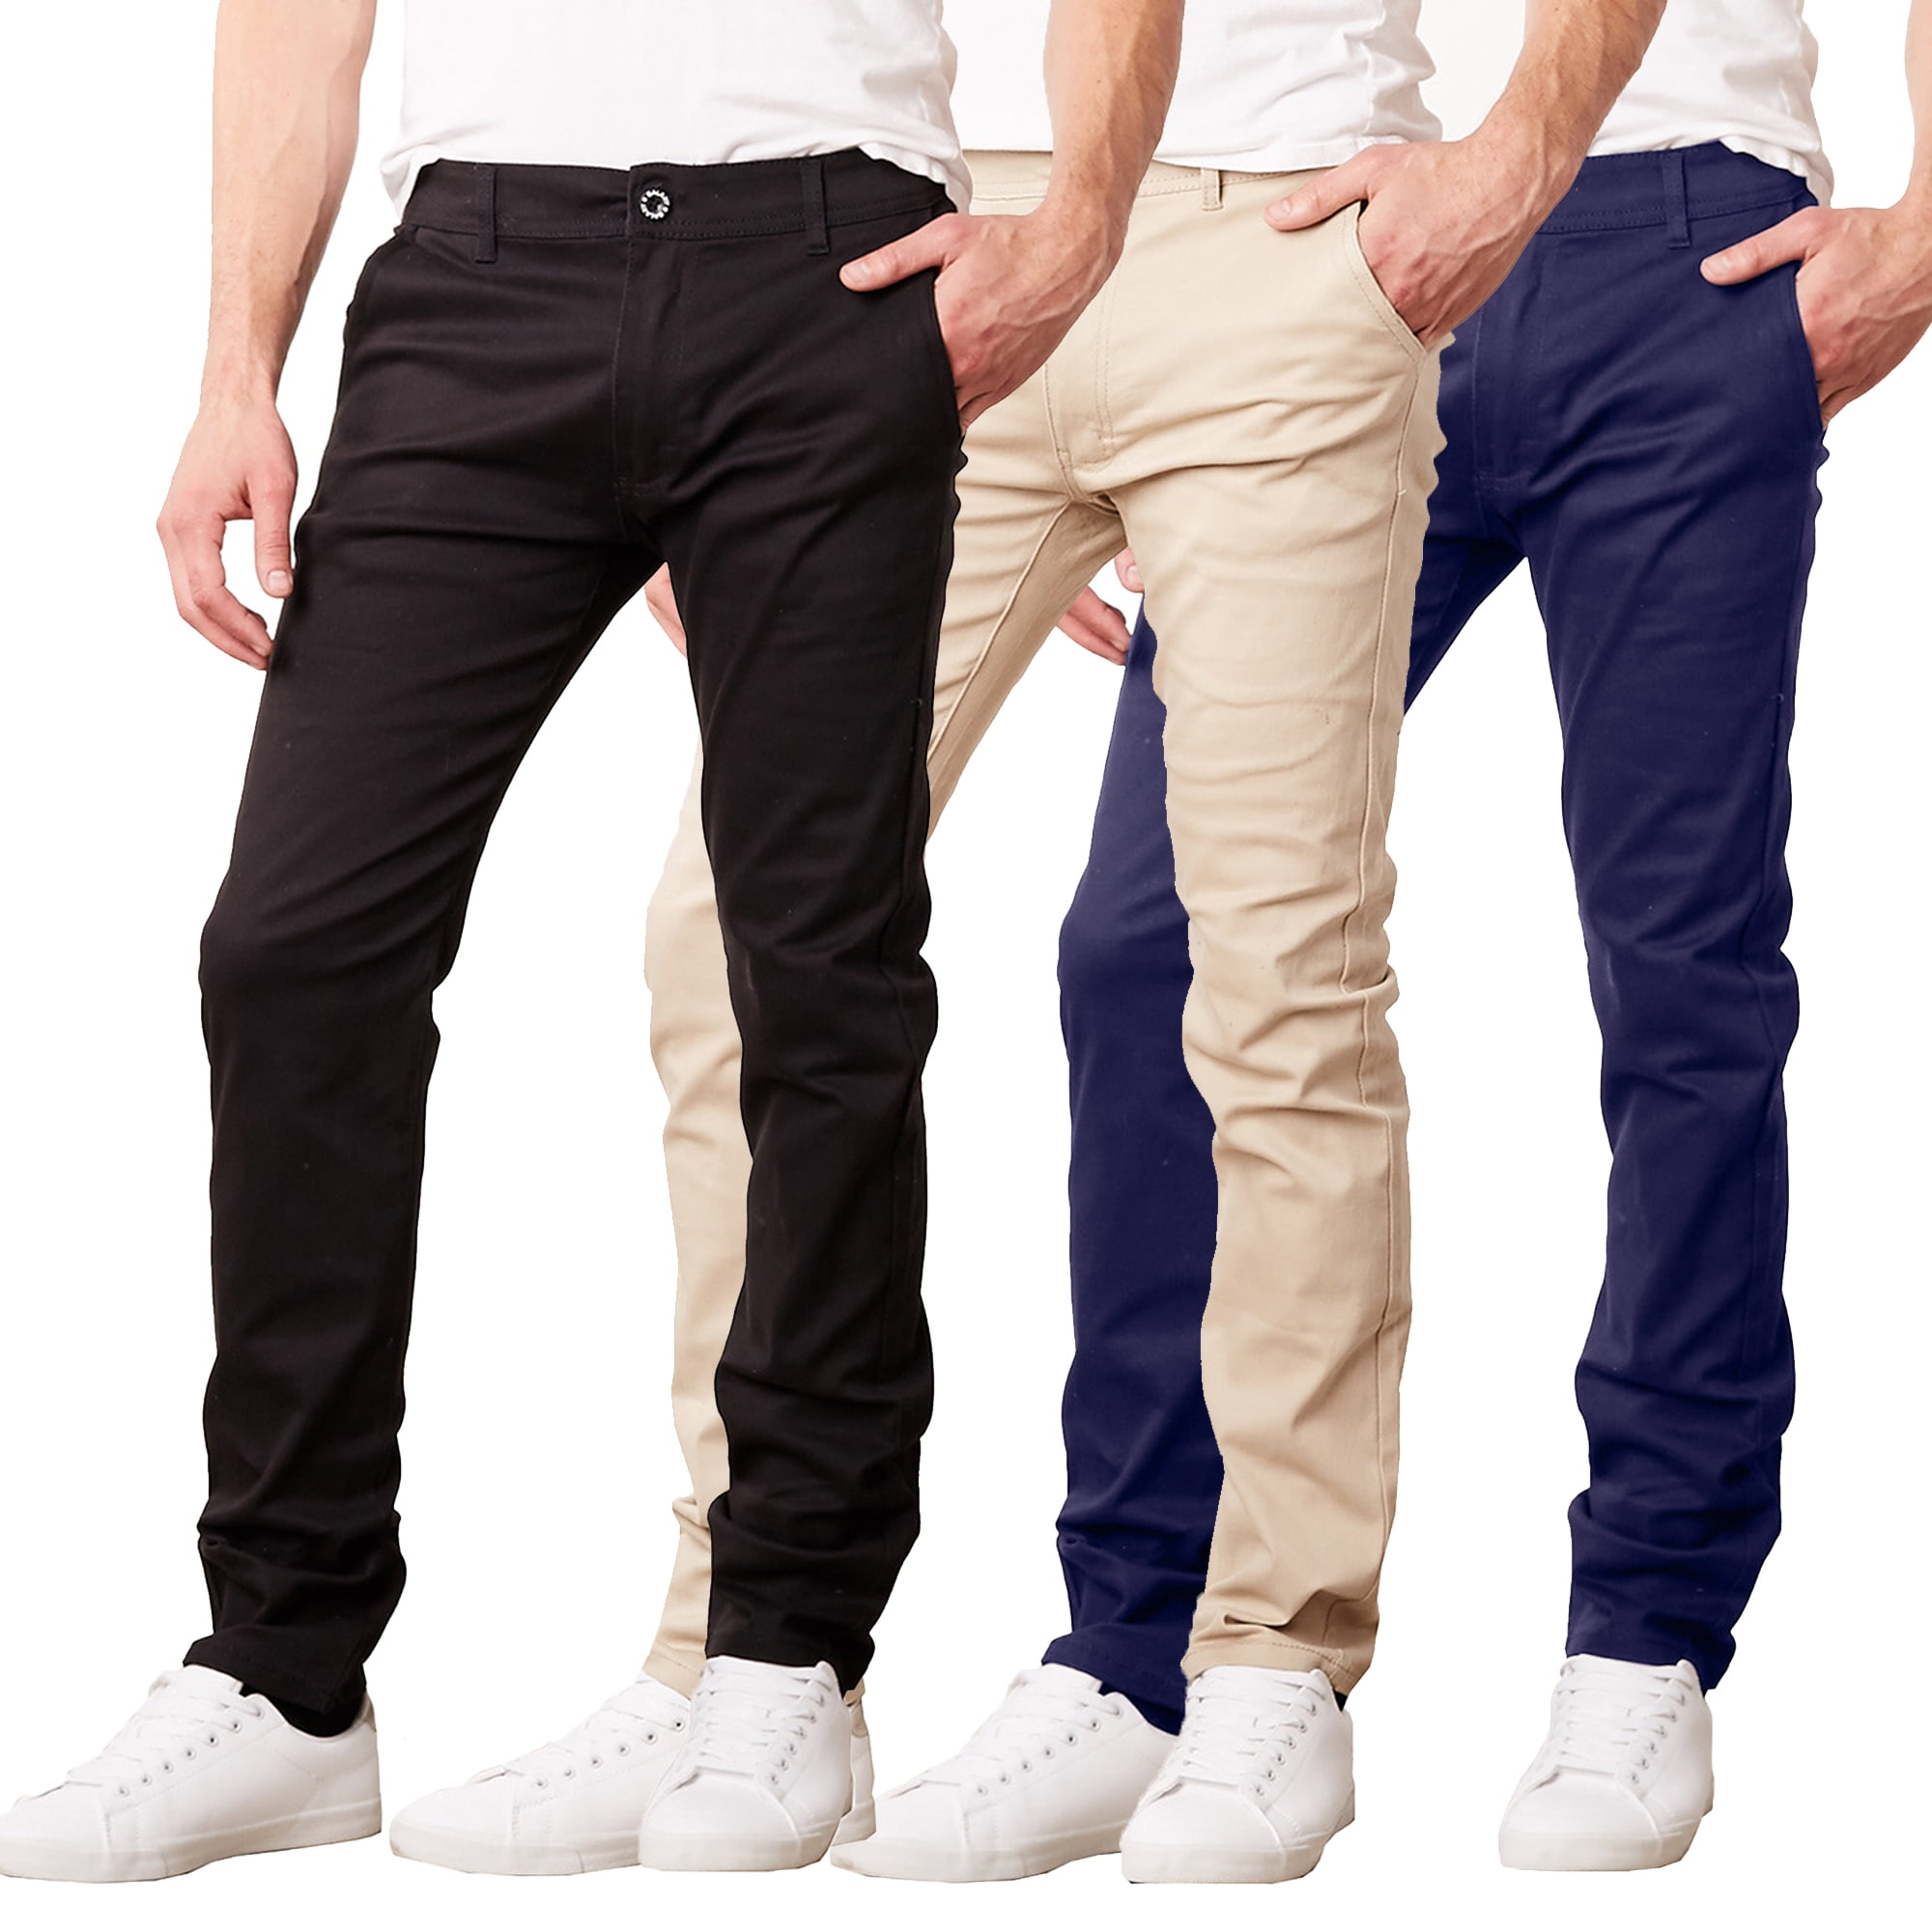 Noak slim premium cotton twill chino pants in khaki | ASOS